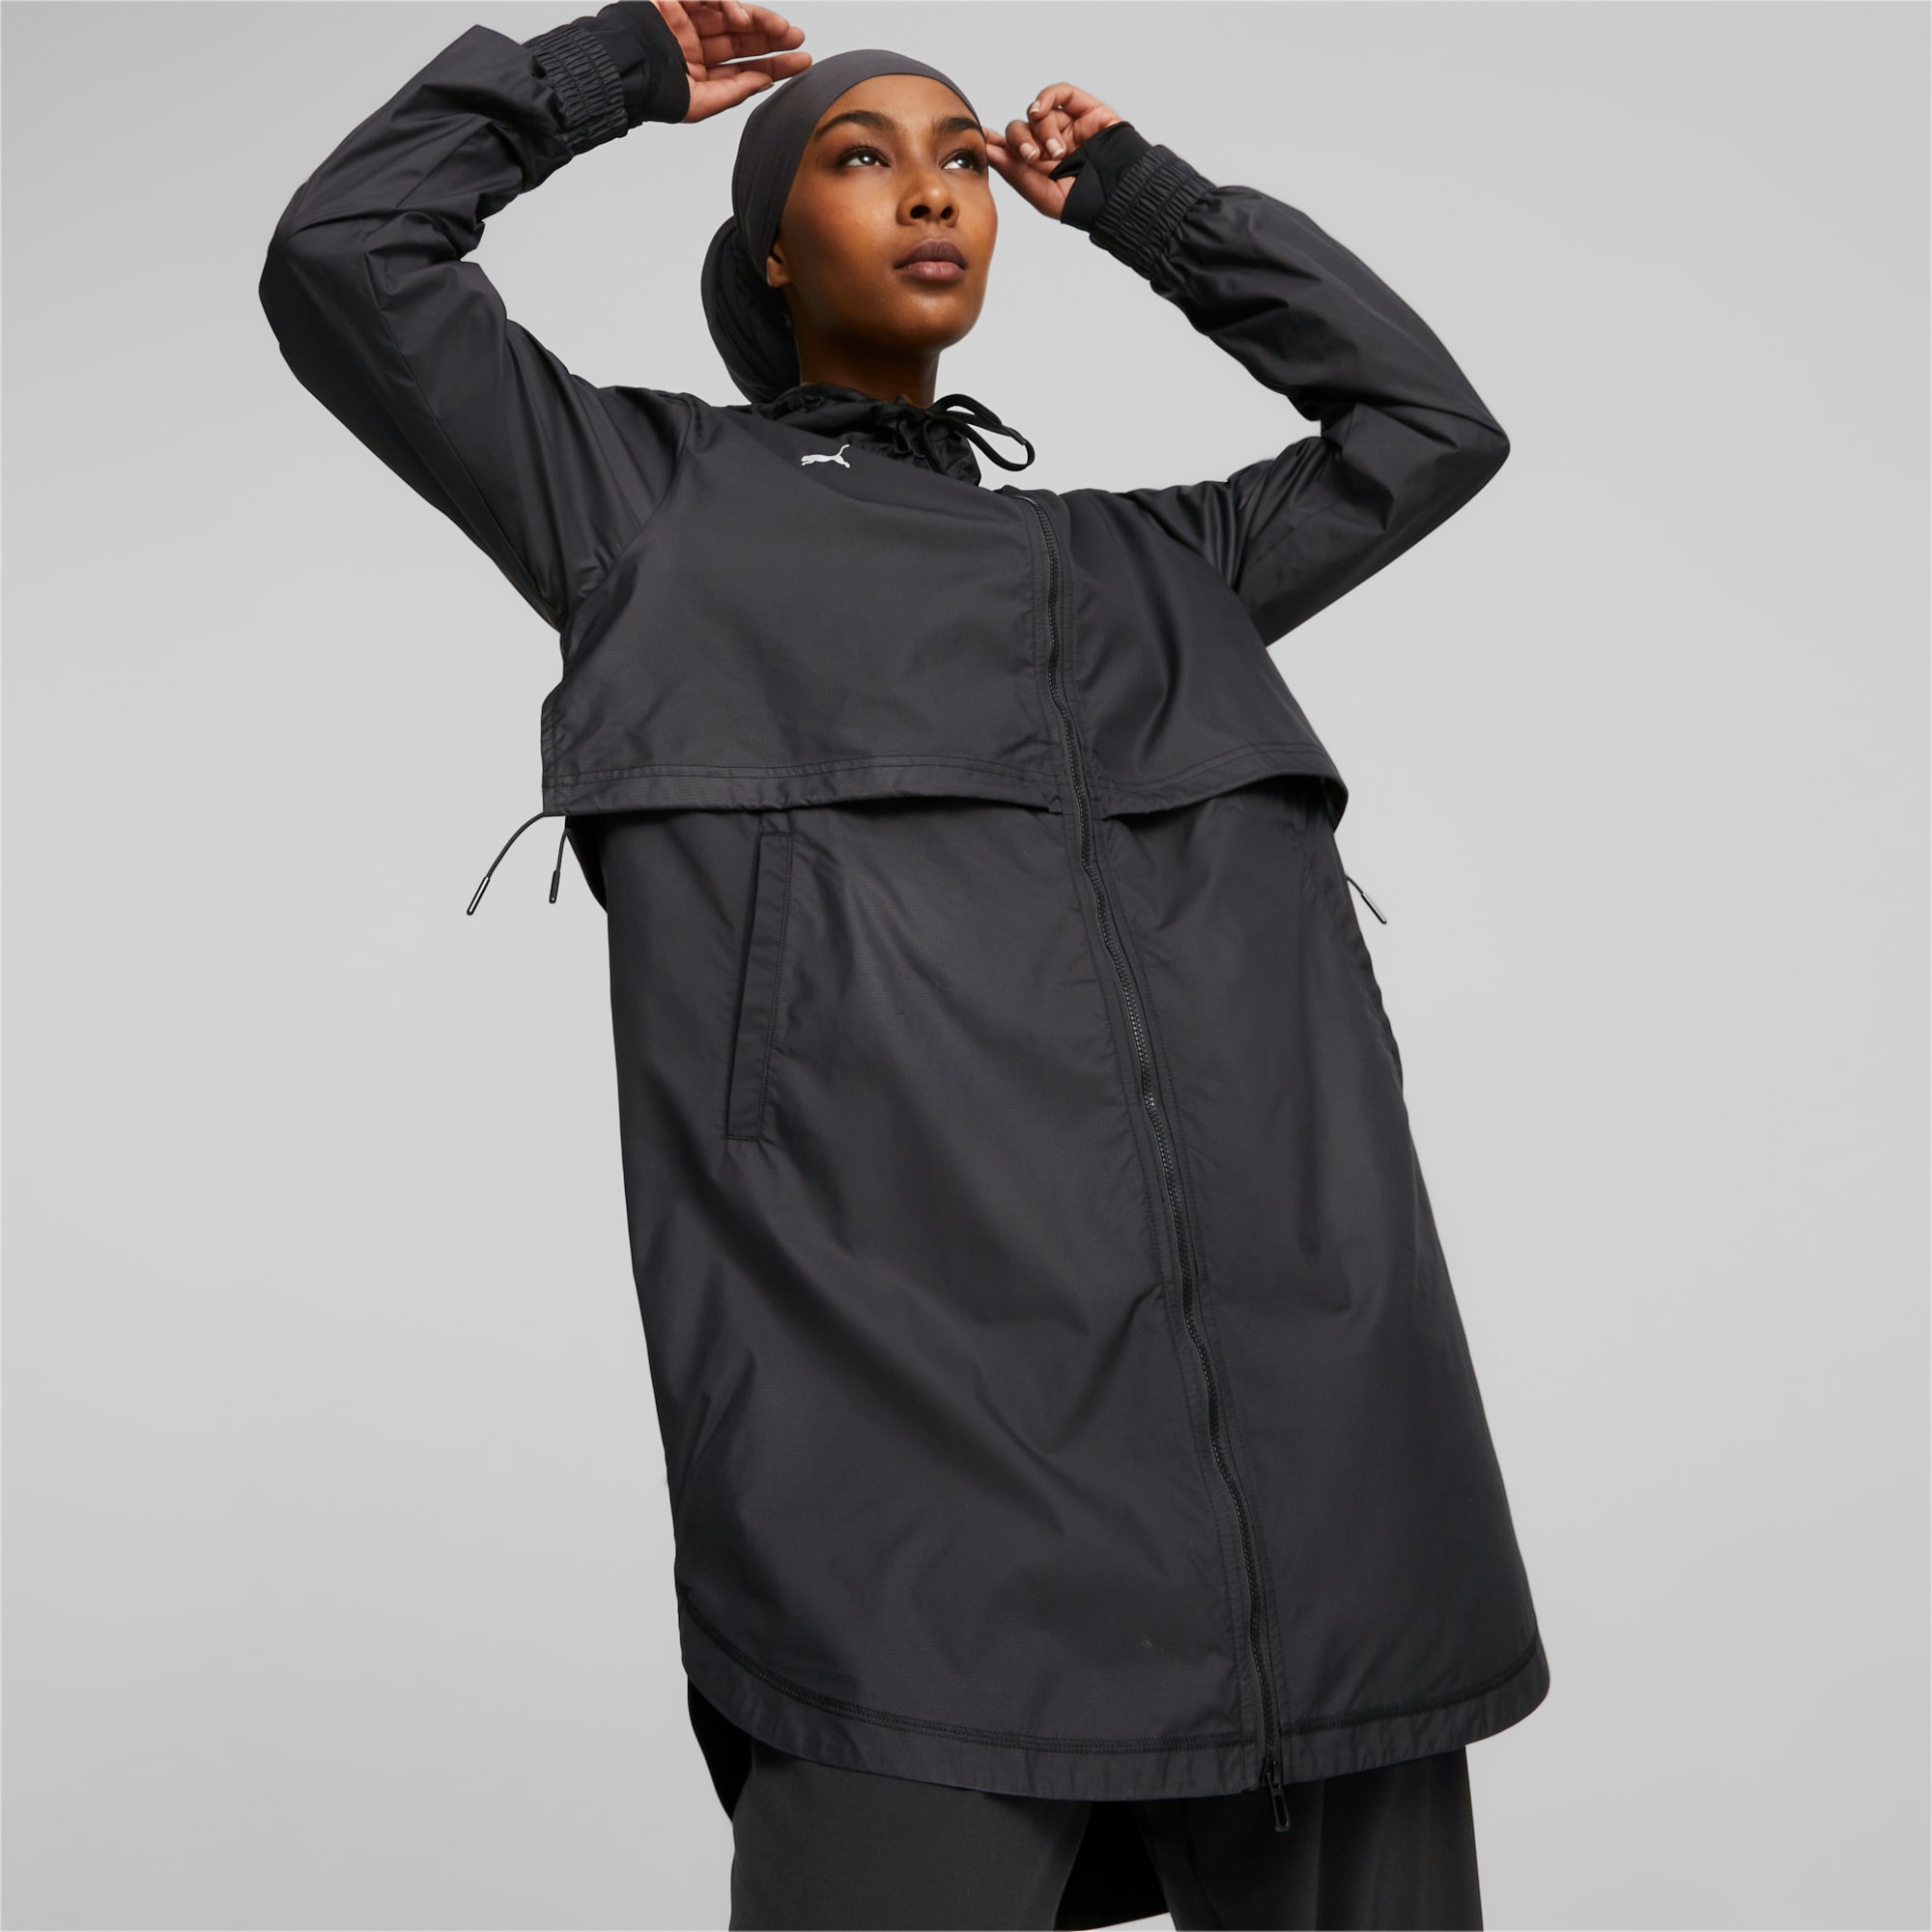 https://images.puma.com/image/upload/f_auto,q_auto,b_rgb:fafafa,w_2000,h_2000/global/521791/01/mod01/fnd/DFA/fmt/png/Modest-Activewear-Training-Rain-Jacket-Women